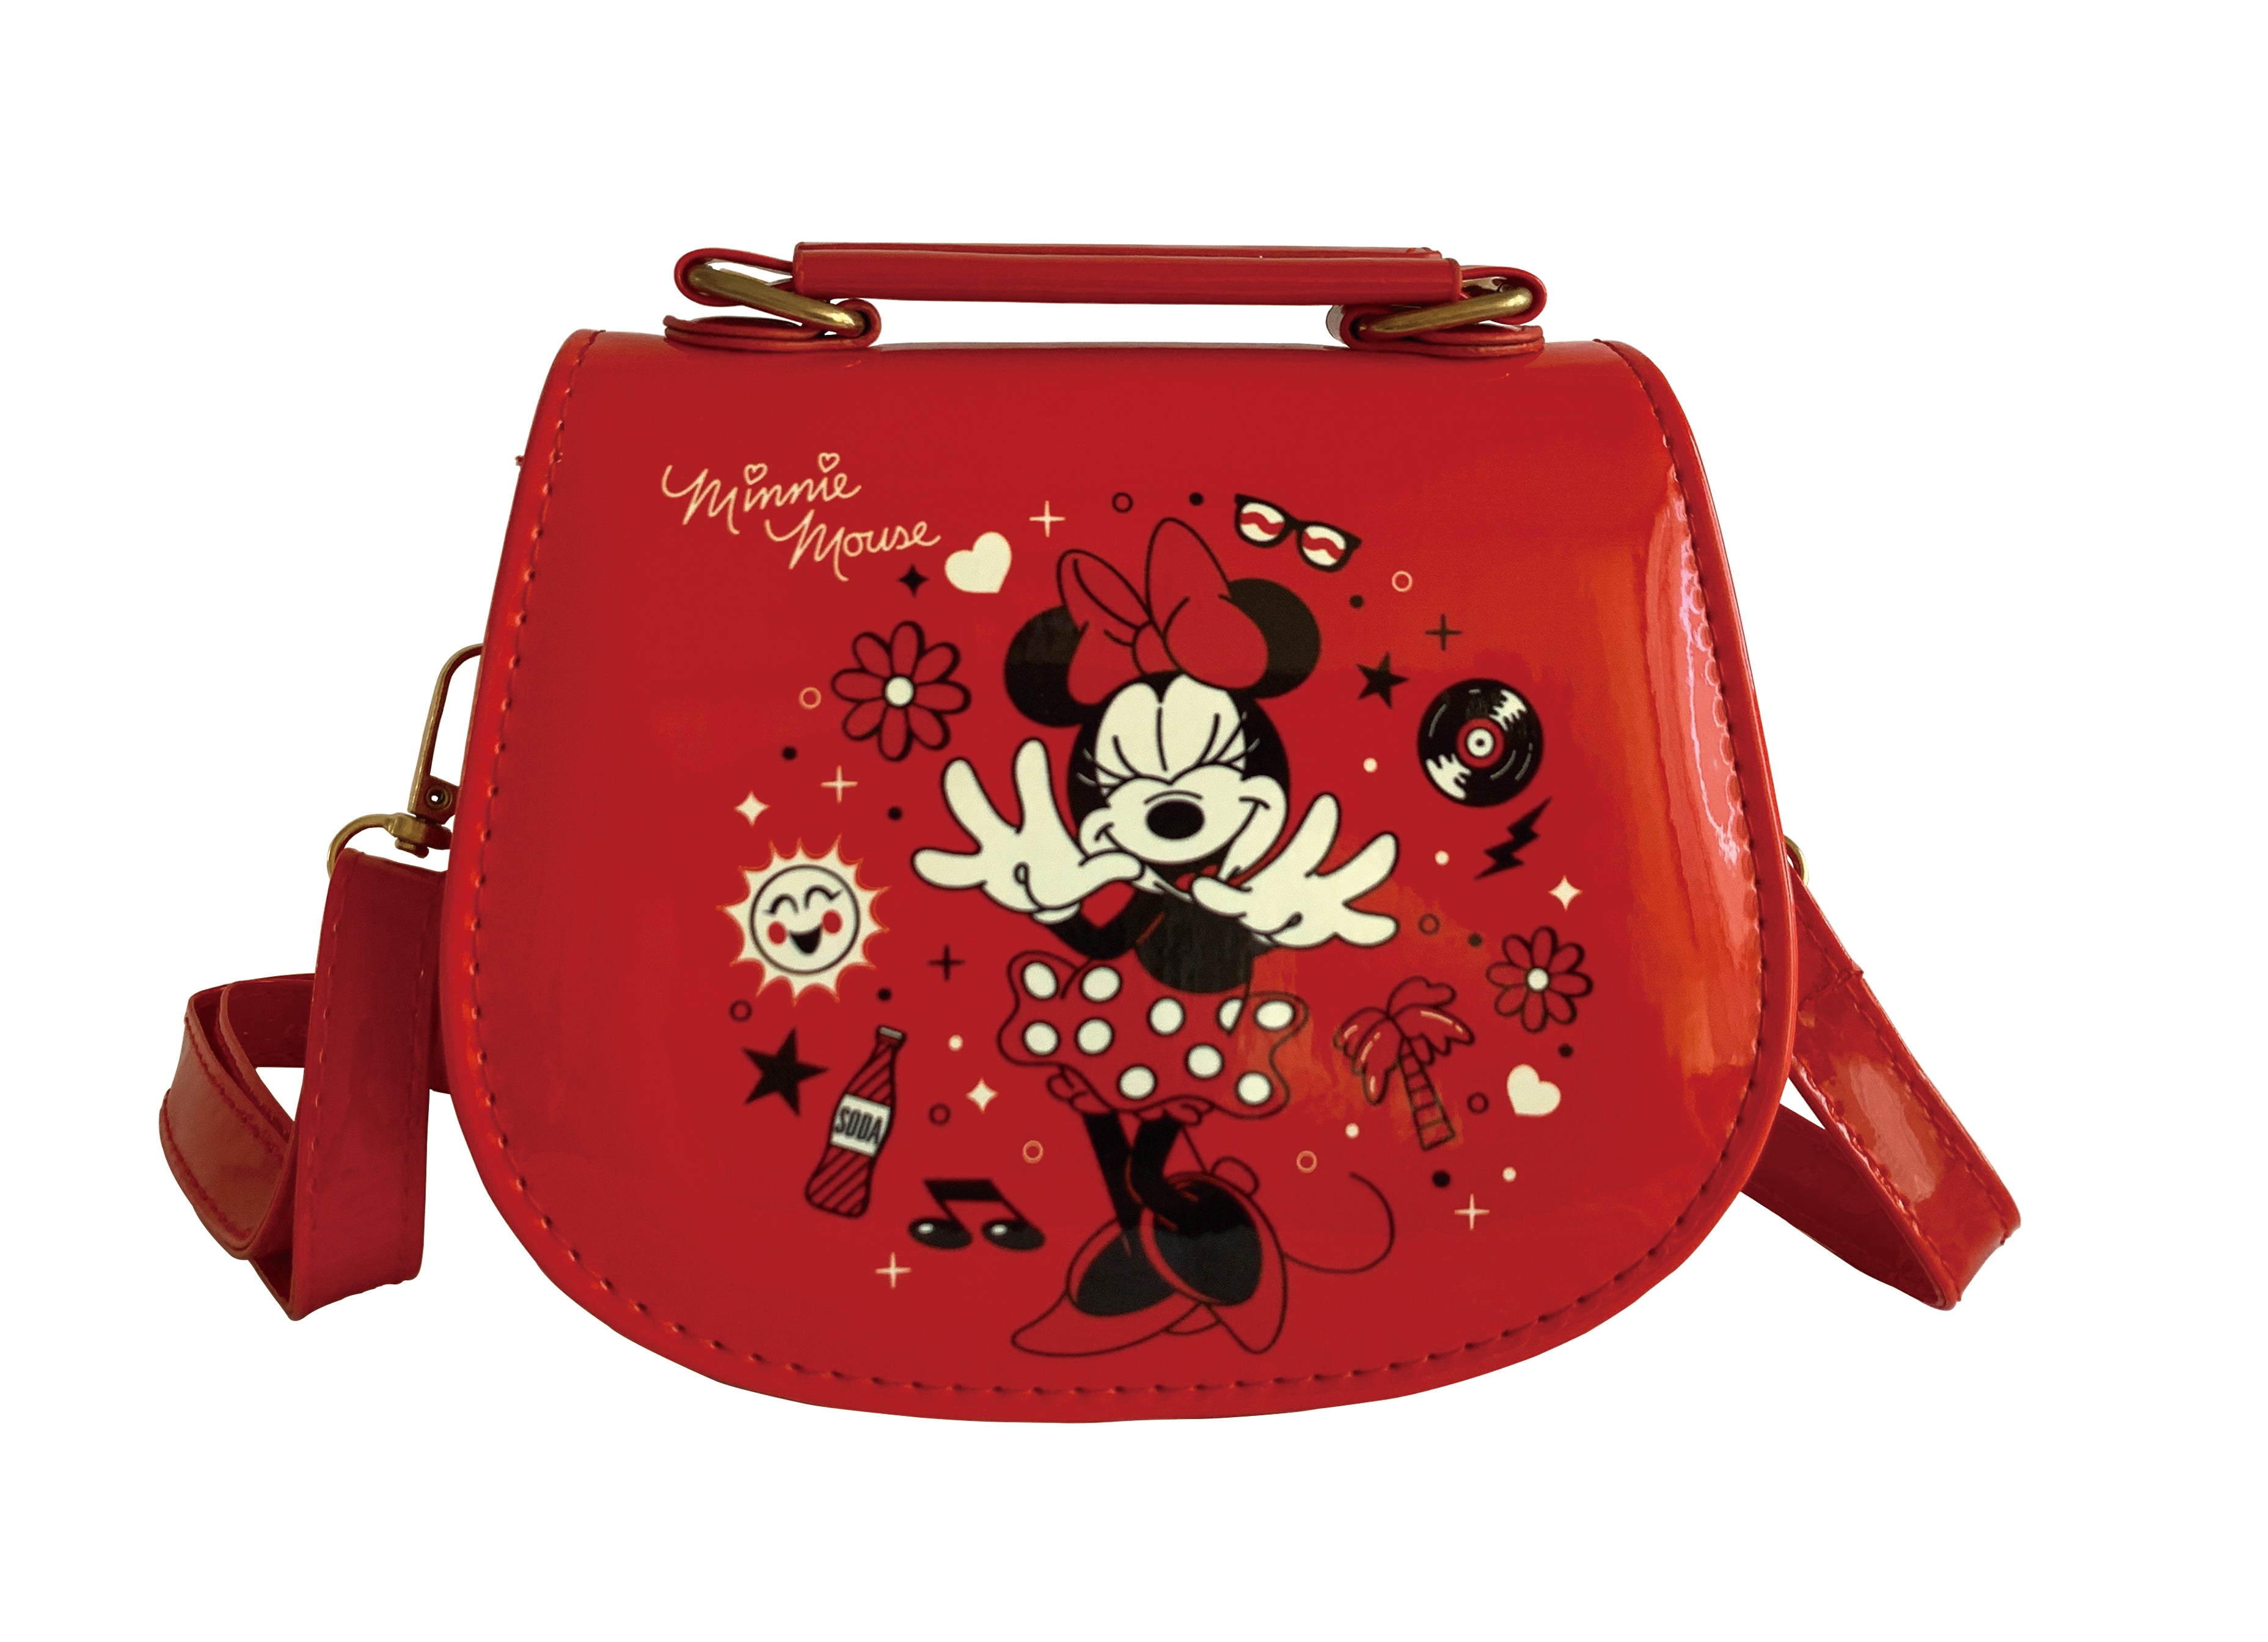 Minnie Mouse - Kids handbag DIS209 - Red - 0